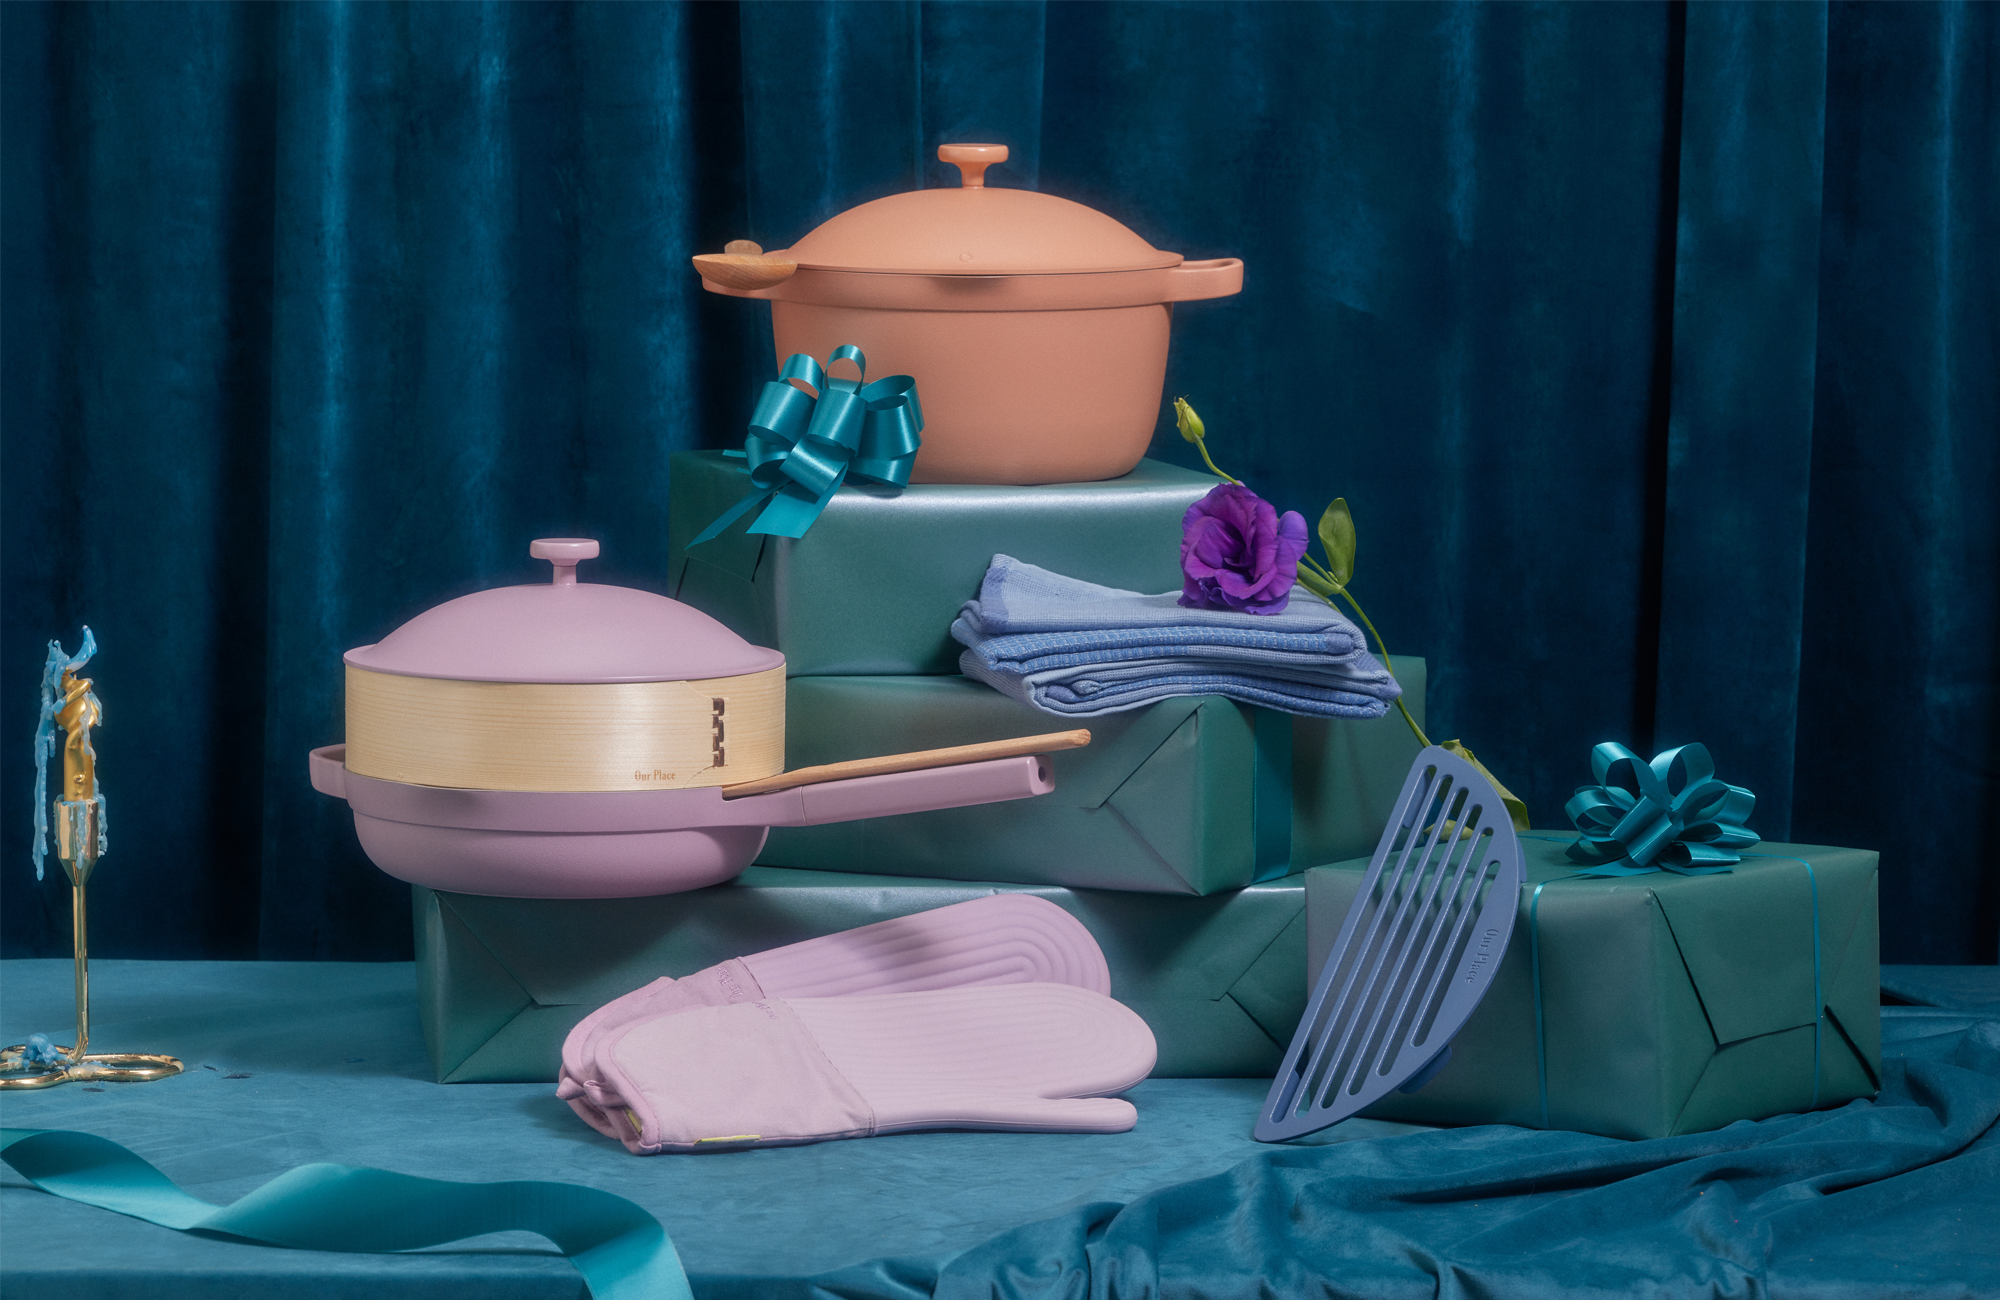 Our Place Kitchen Linens Set | Features Apron, 2 Oven Mitts & 2 Dish Towels | All Machine Washable | Color: Blue Salt